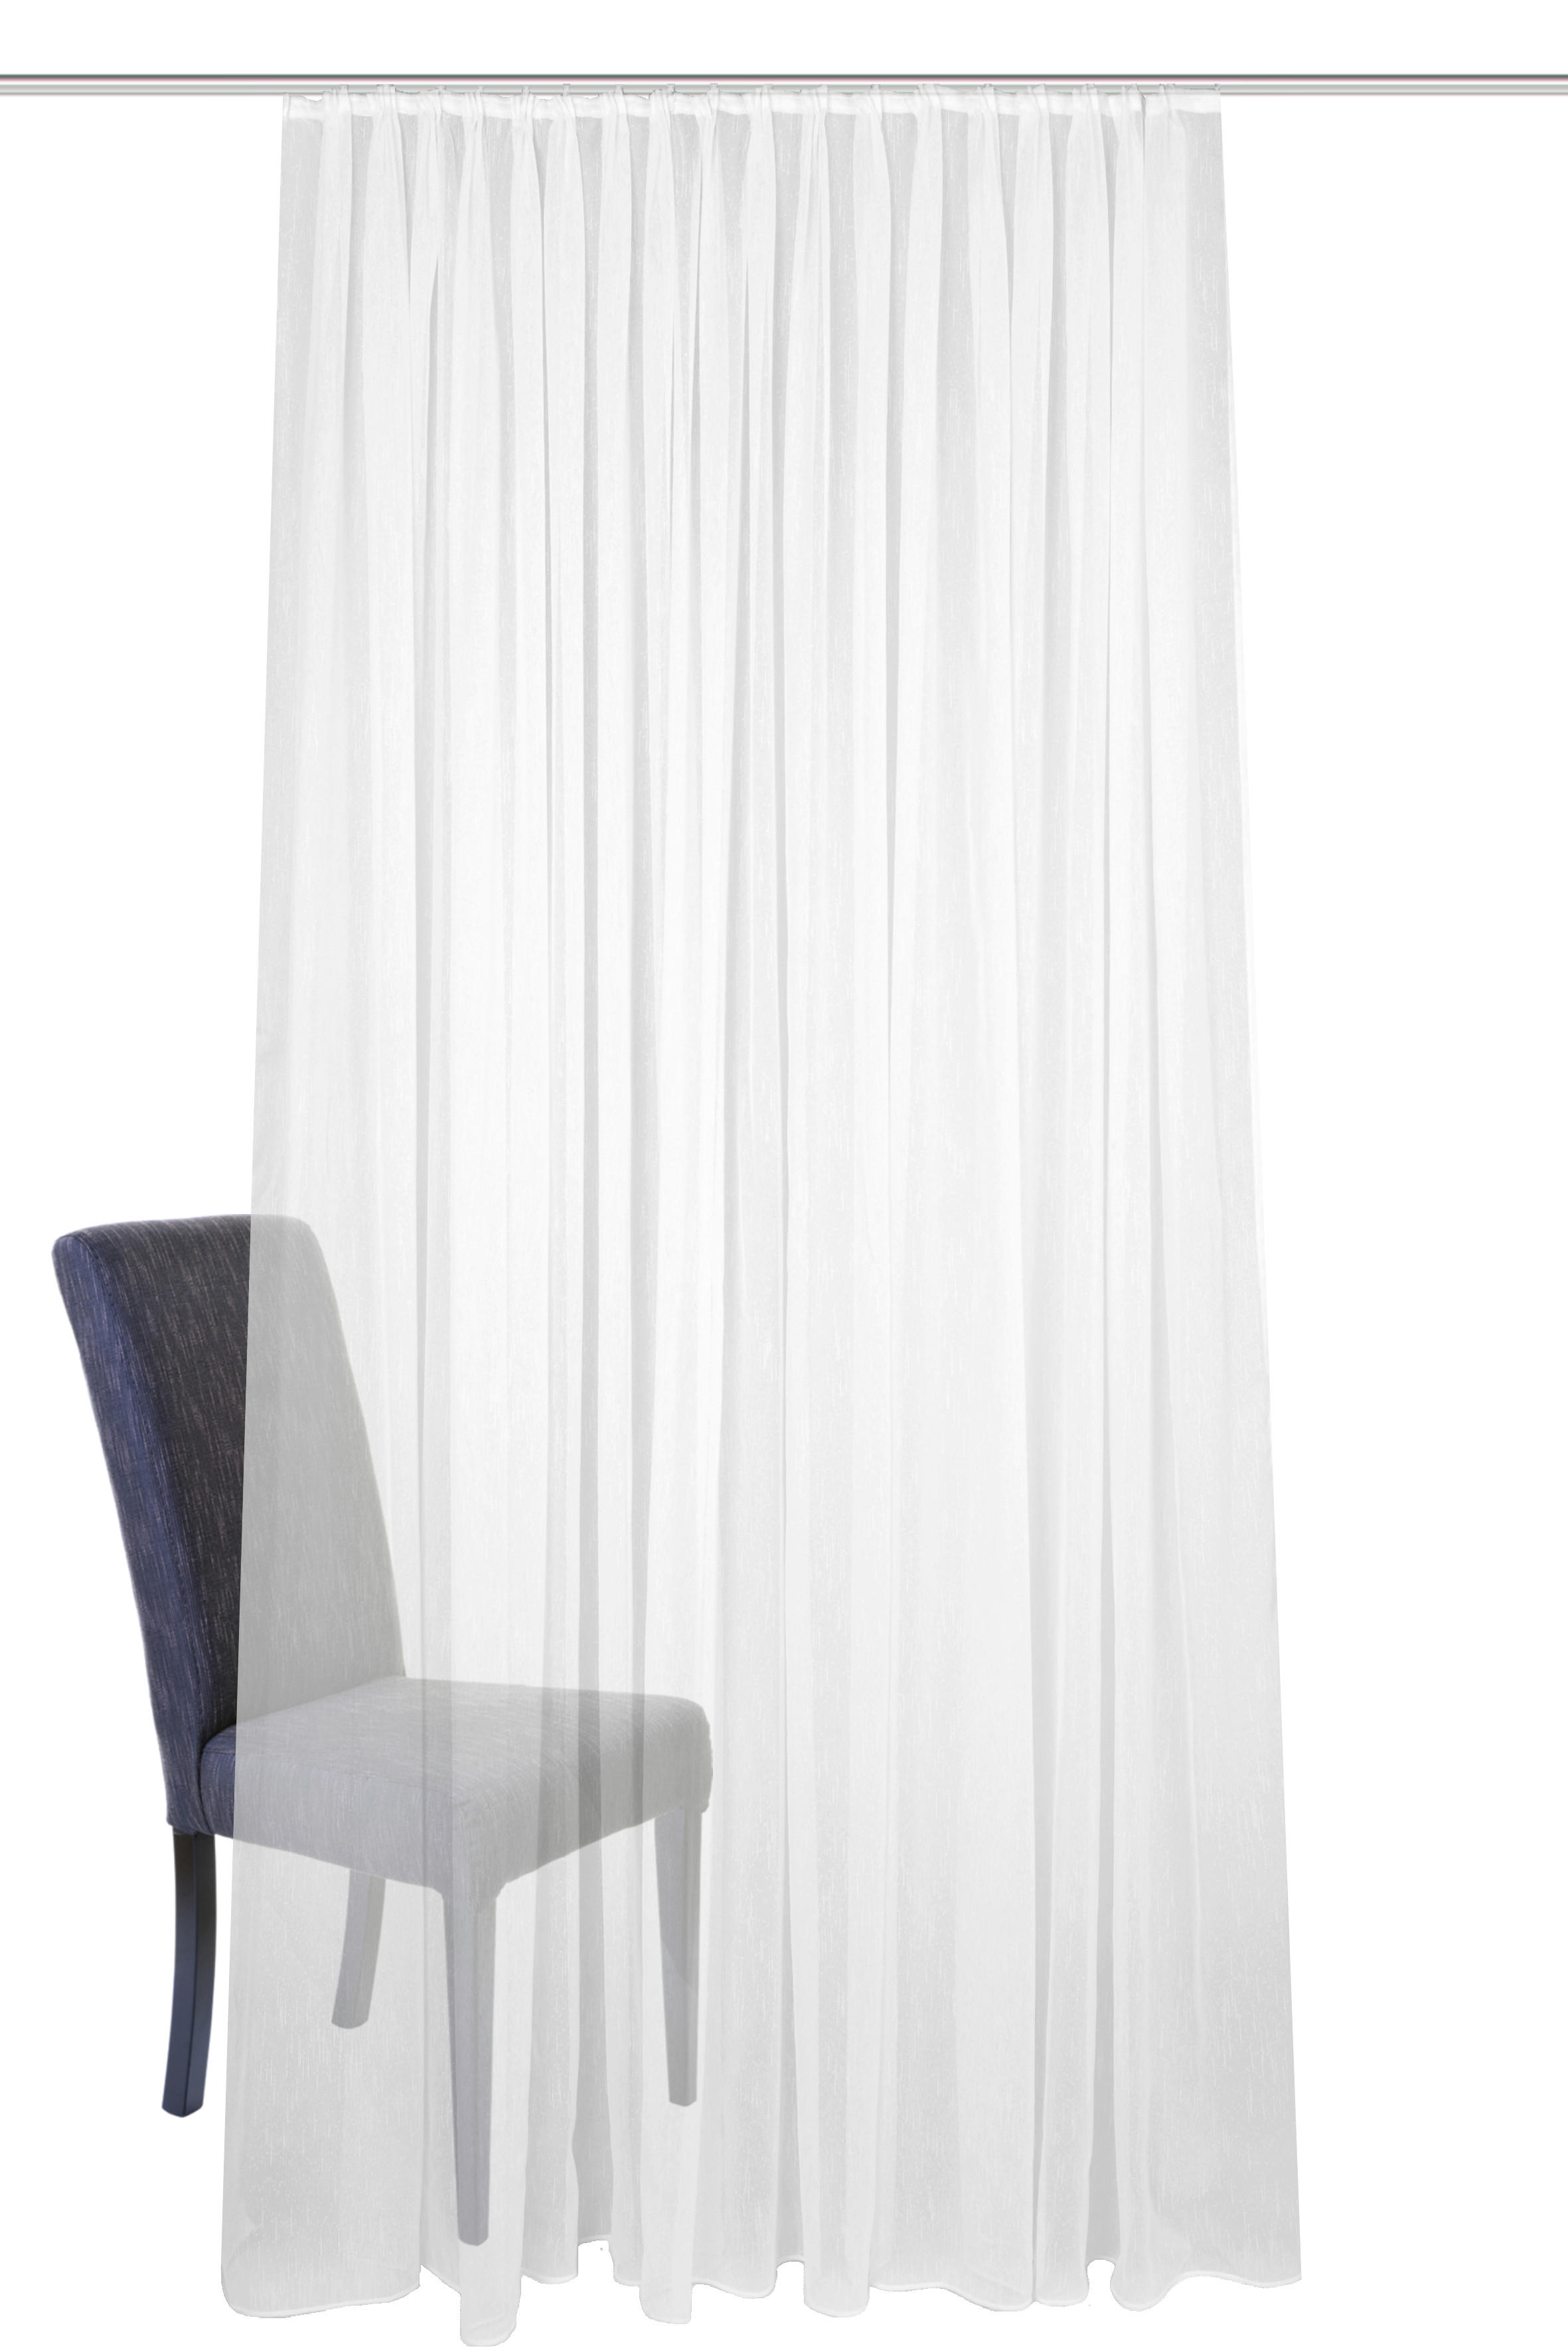 FERTIGSTORE  transparent  600/145 cm   - Weiß, Basics, Textil (600/145cm)